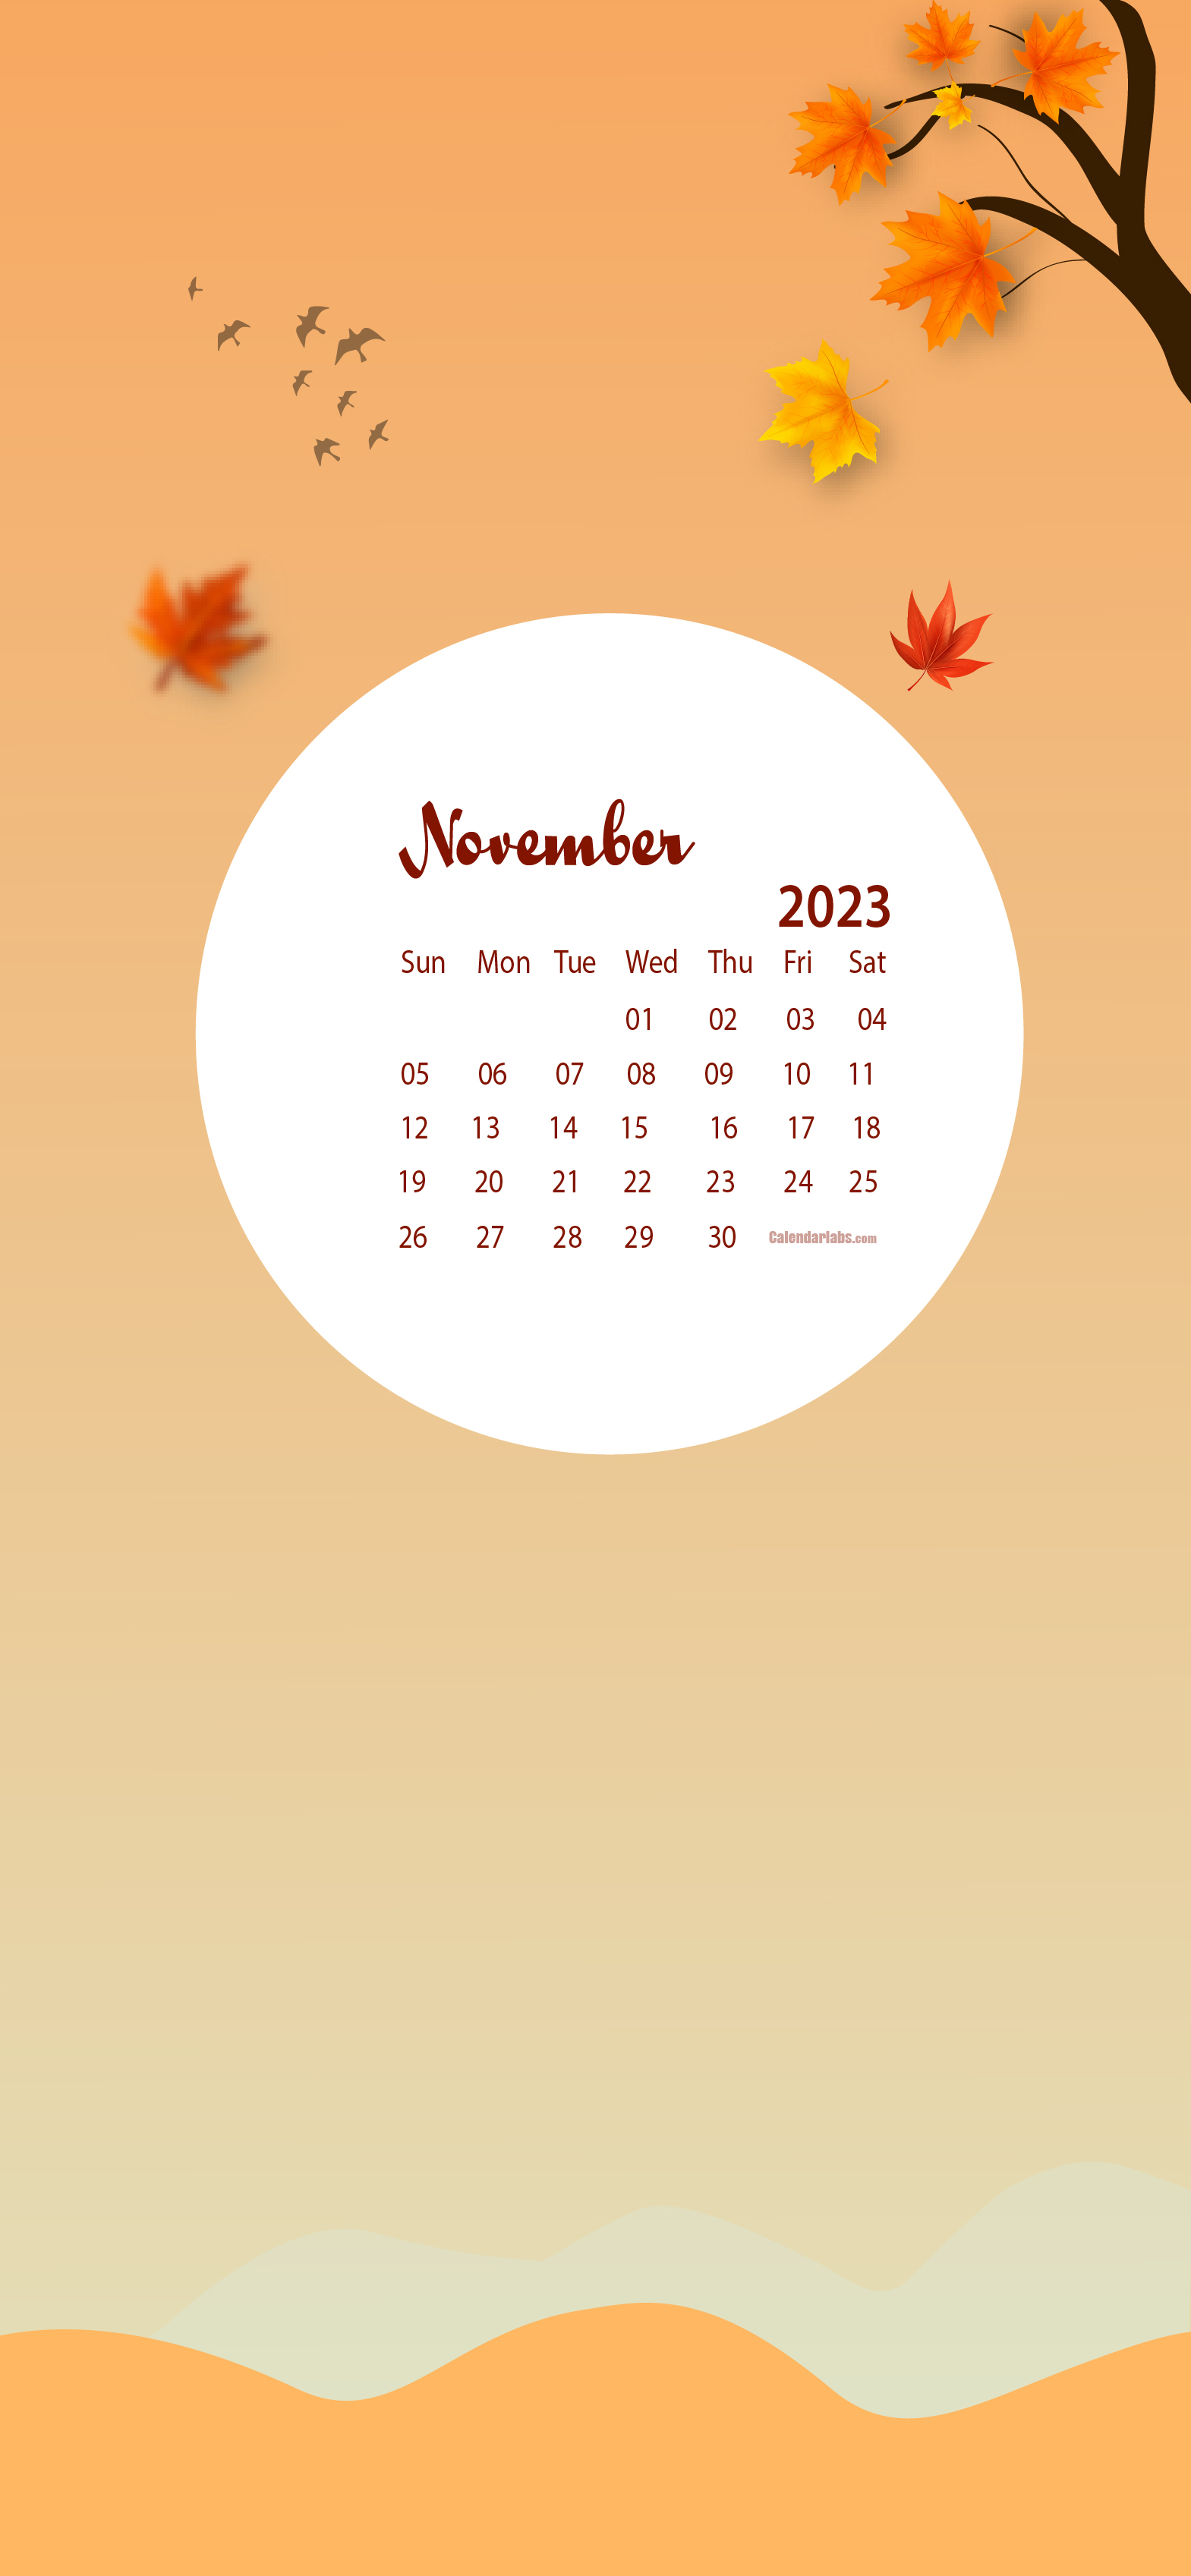 November 2022 Calendar Phone Wallpapers HD  PixelsTalkNet